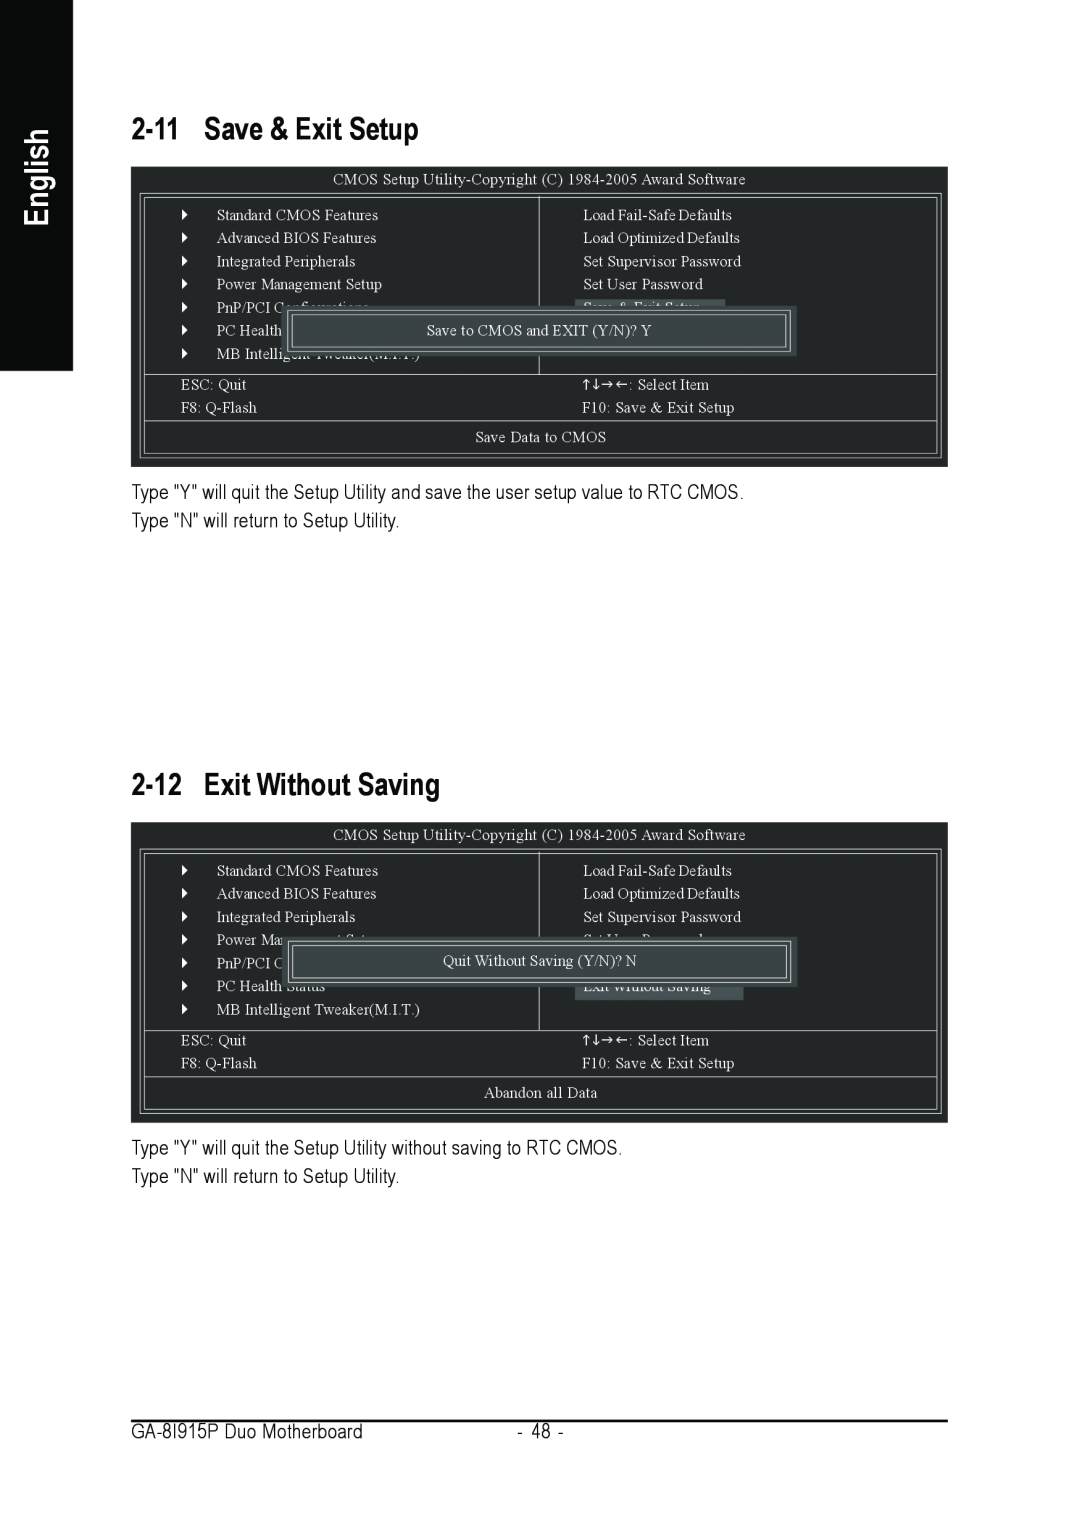 Gigabyte GA-8I915P DUO user manual Save & Exit Setup, Exit Without Saving, English 